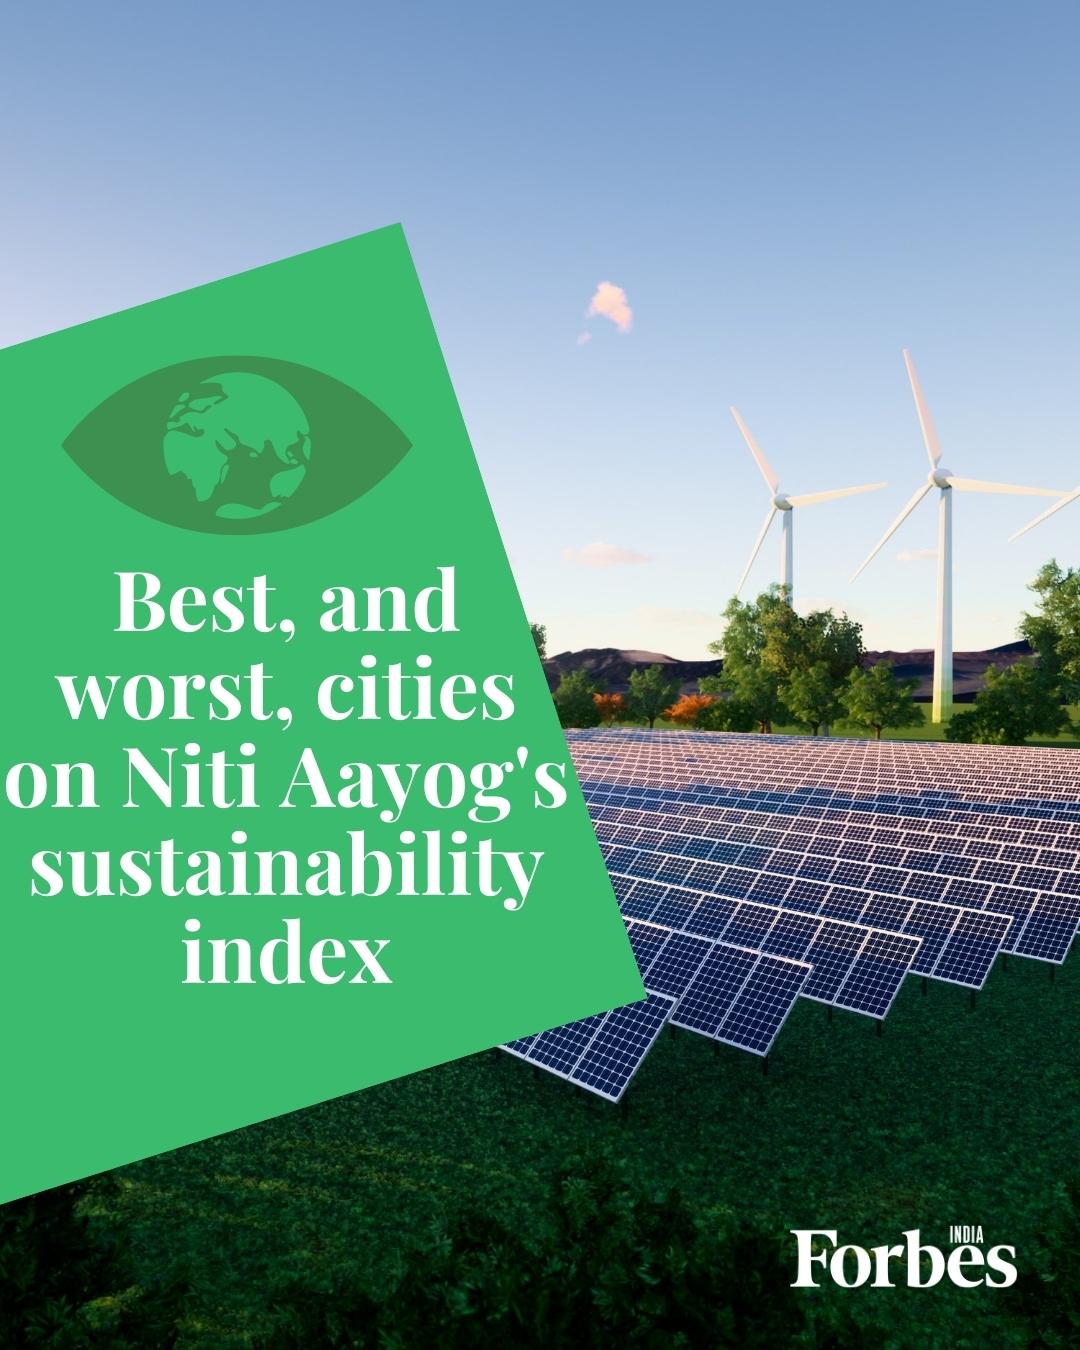 Shimla ranks highest on Niti Aayog's sustainability index